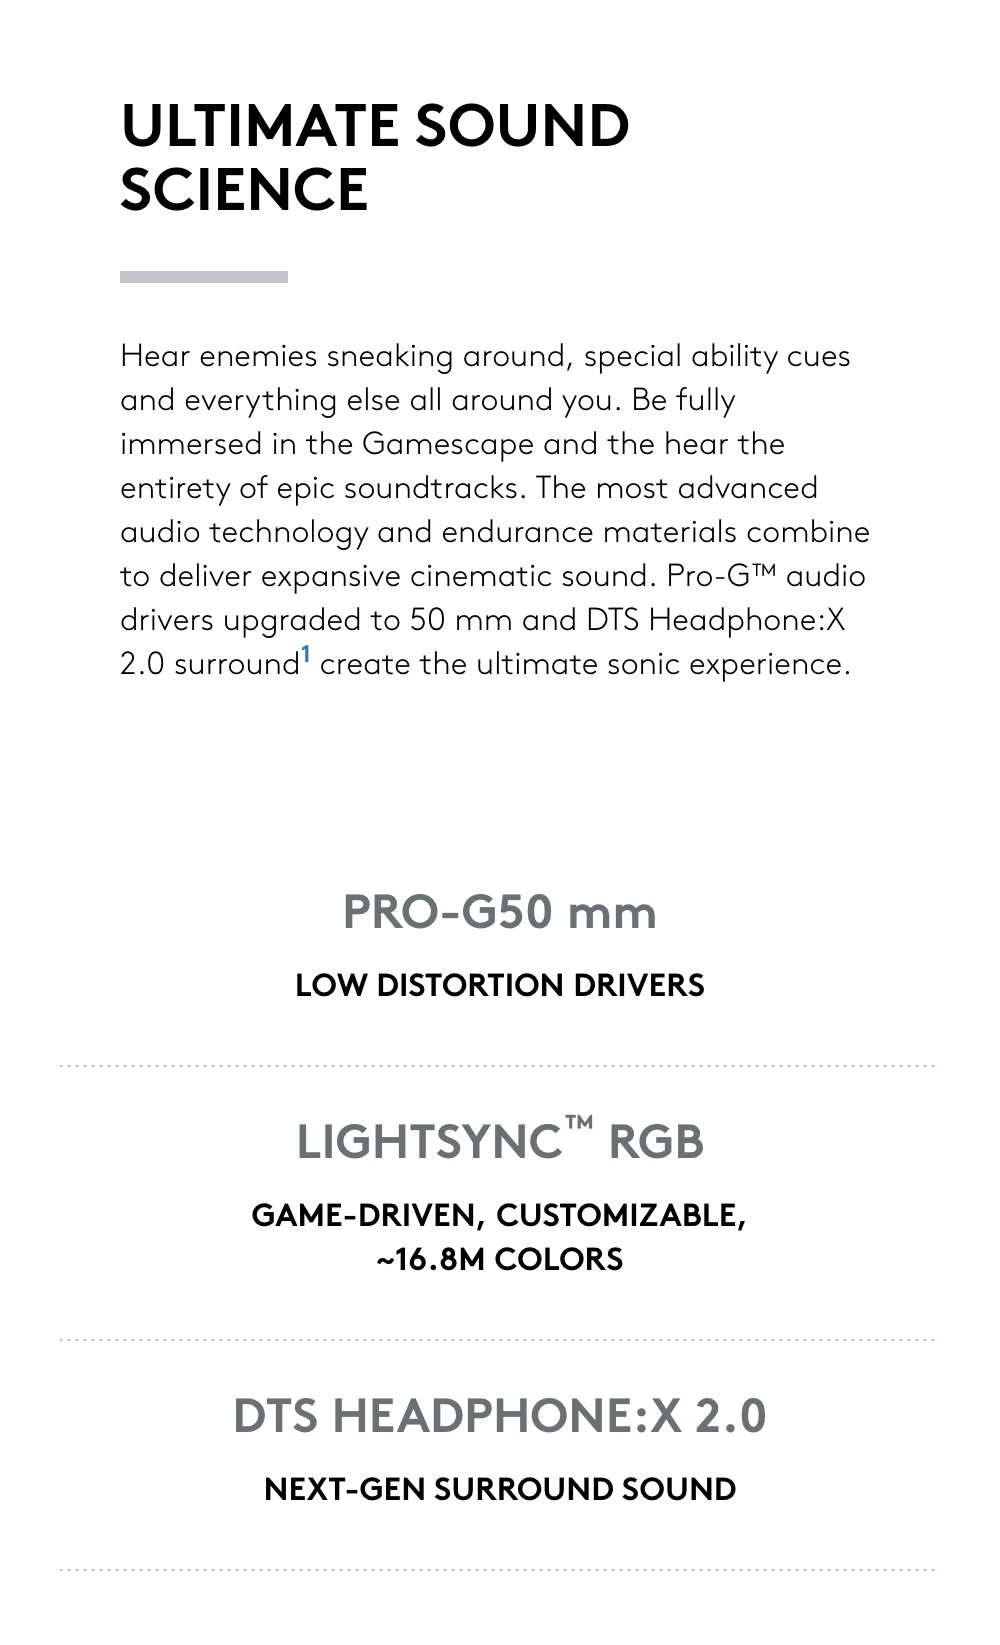 Logitech-G633S-7.1-Surround-Sound-Lightsync-RGB-Gaming-Headset-Description-1